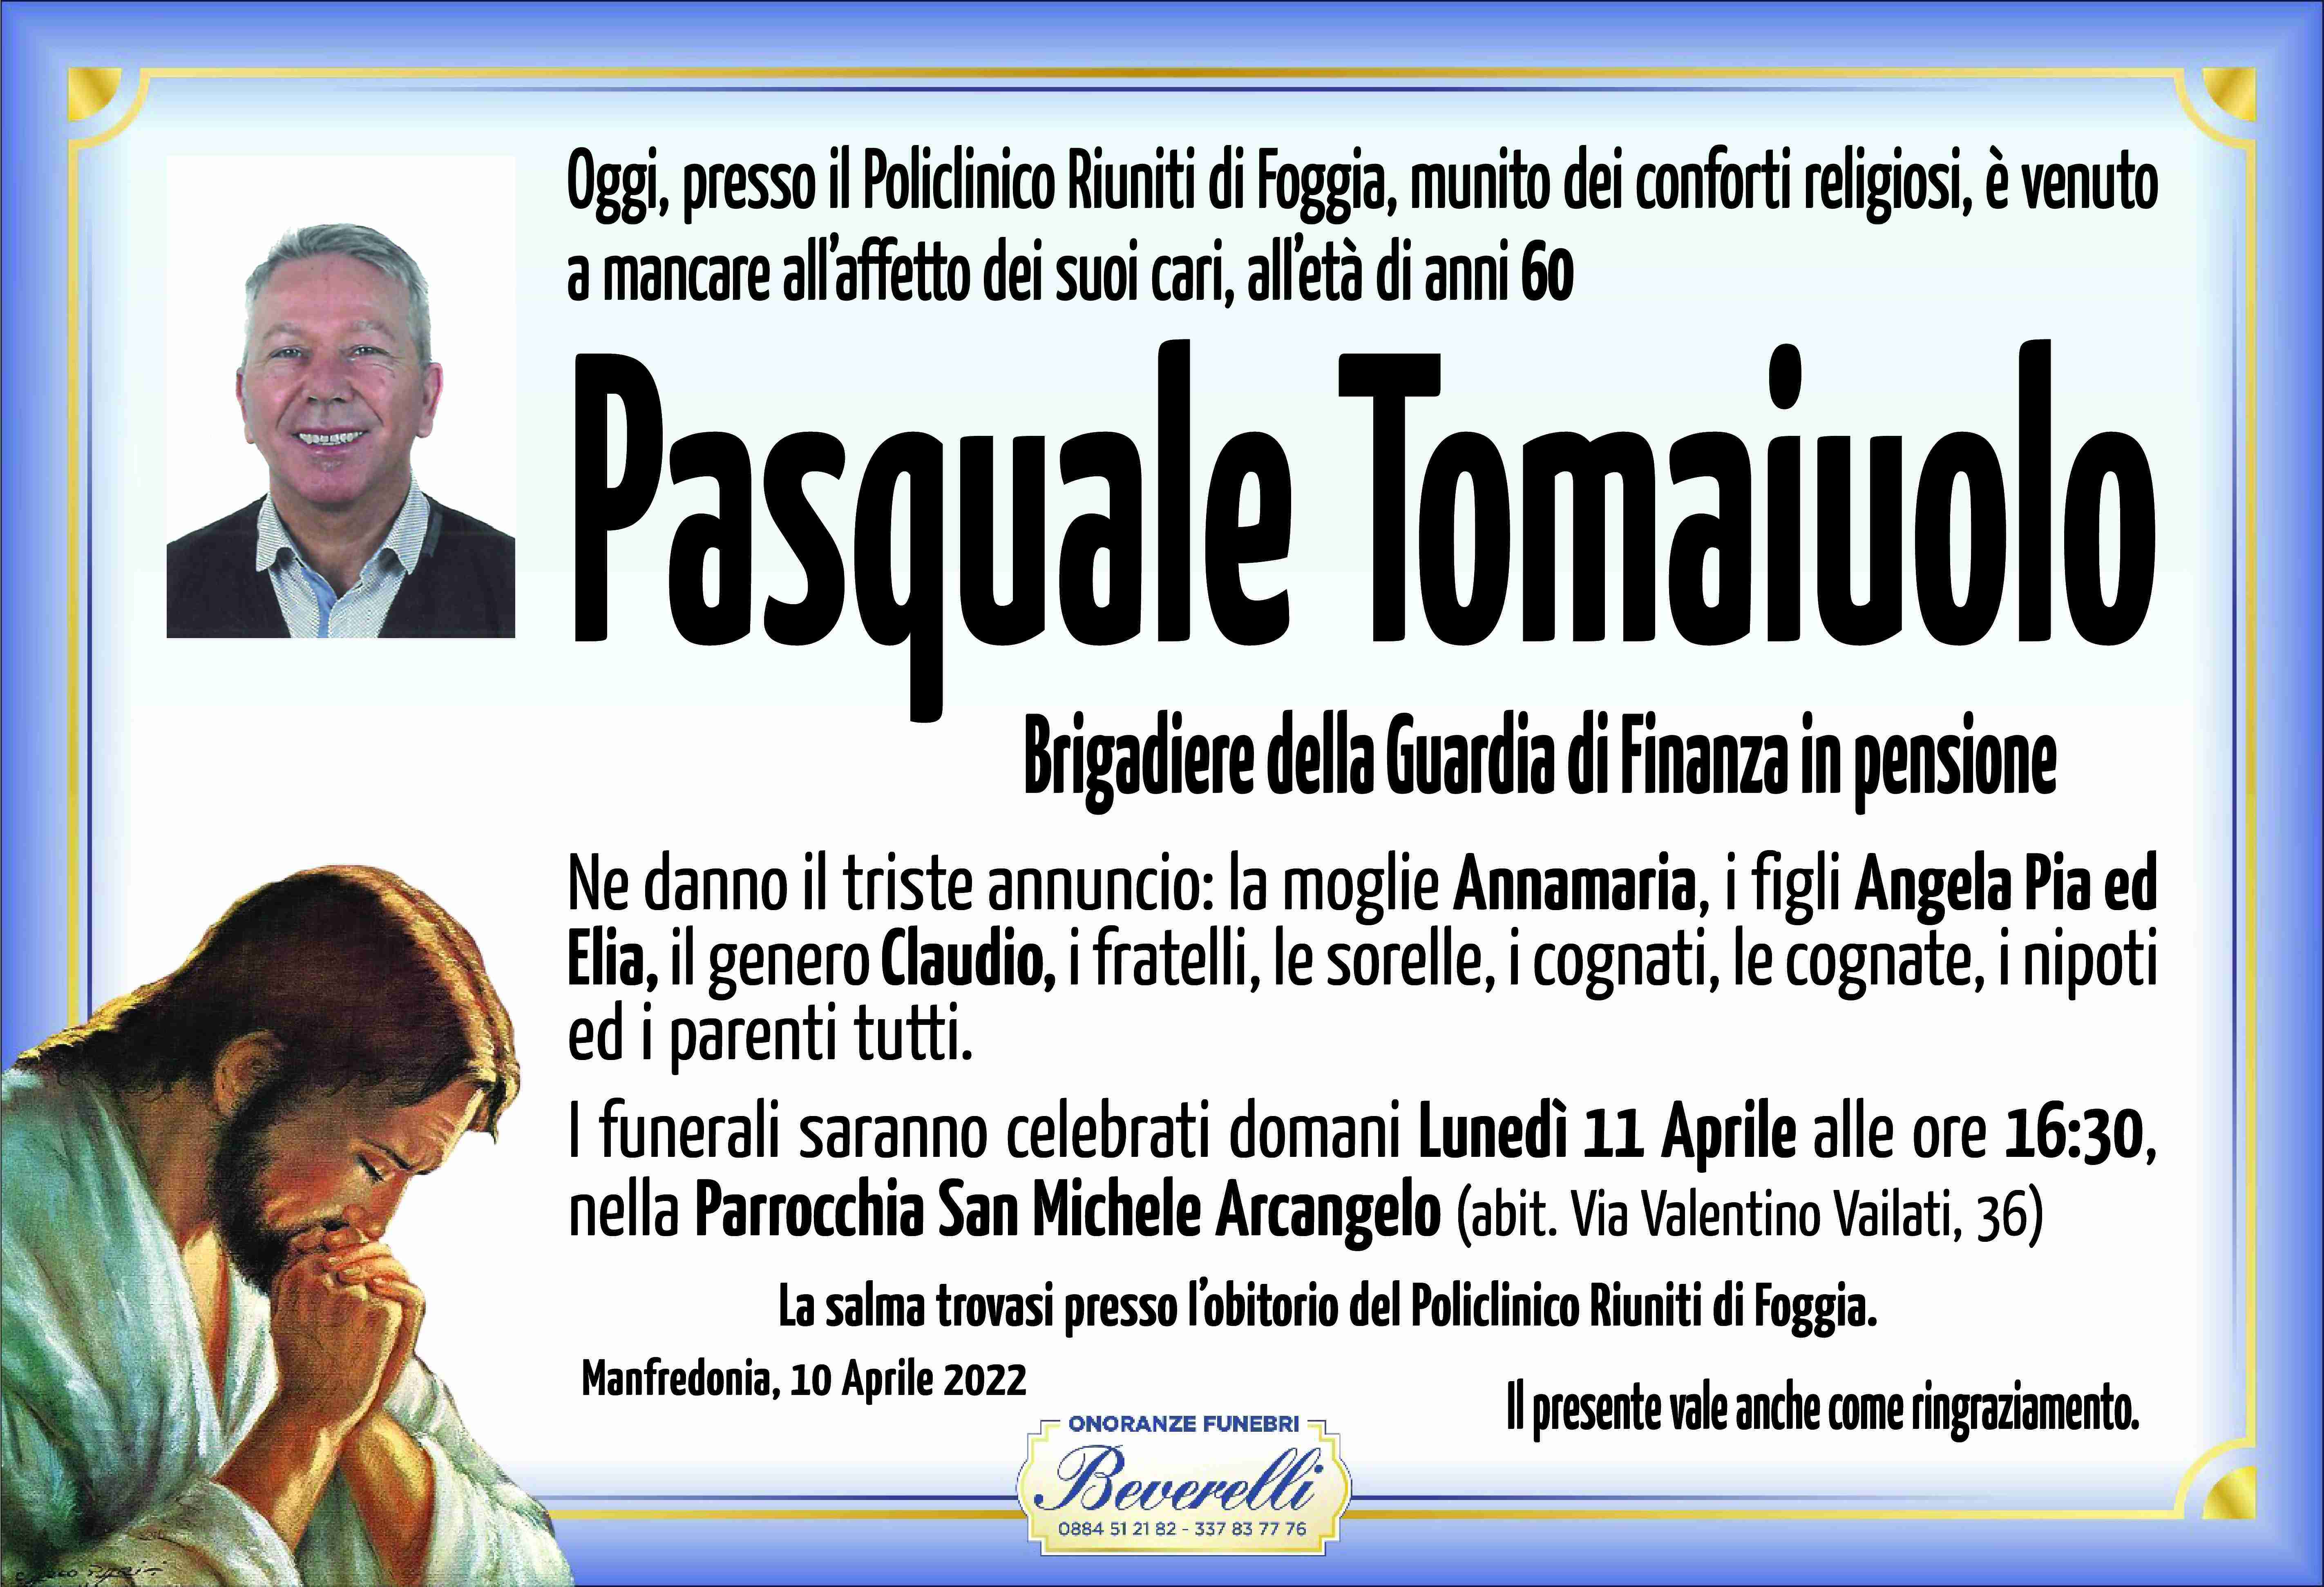 Pasquale Tomaiuolo